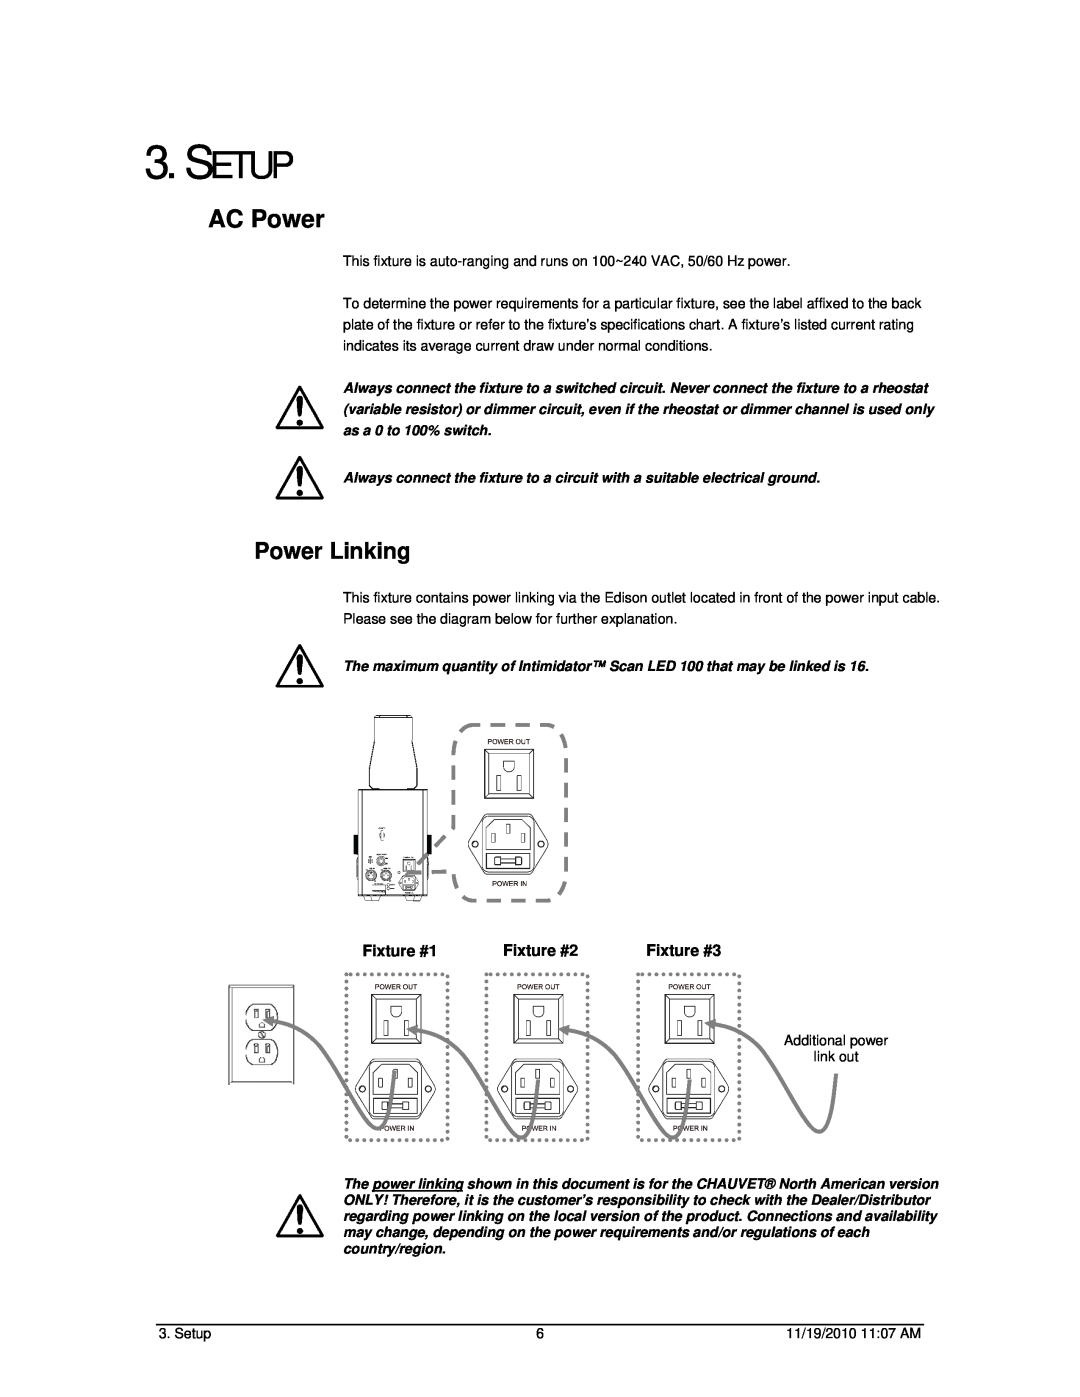 Chauvet SCAN LED 100 user manual Setup, AC Power, Power Linking, Fixture #1, Fixture #2, Fixture #3 